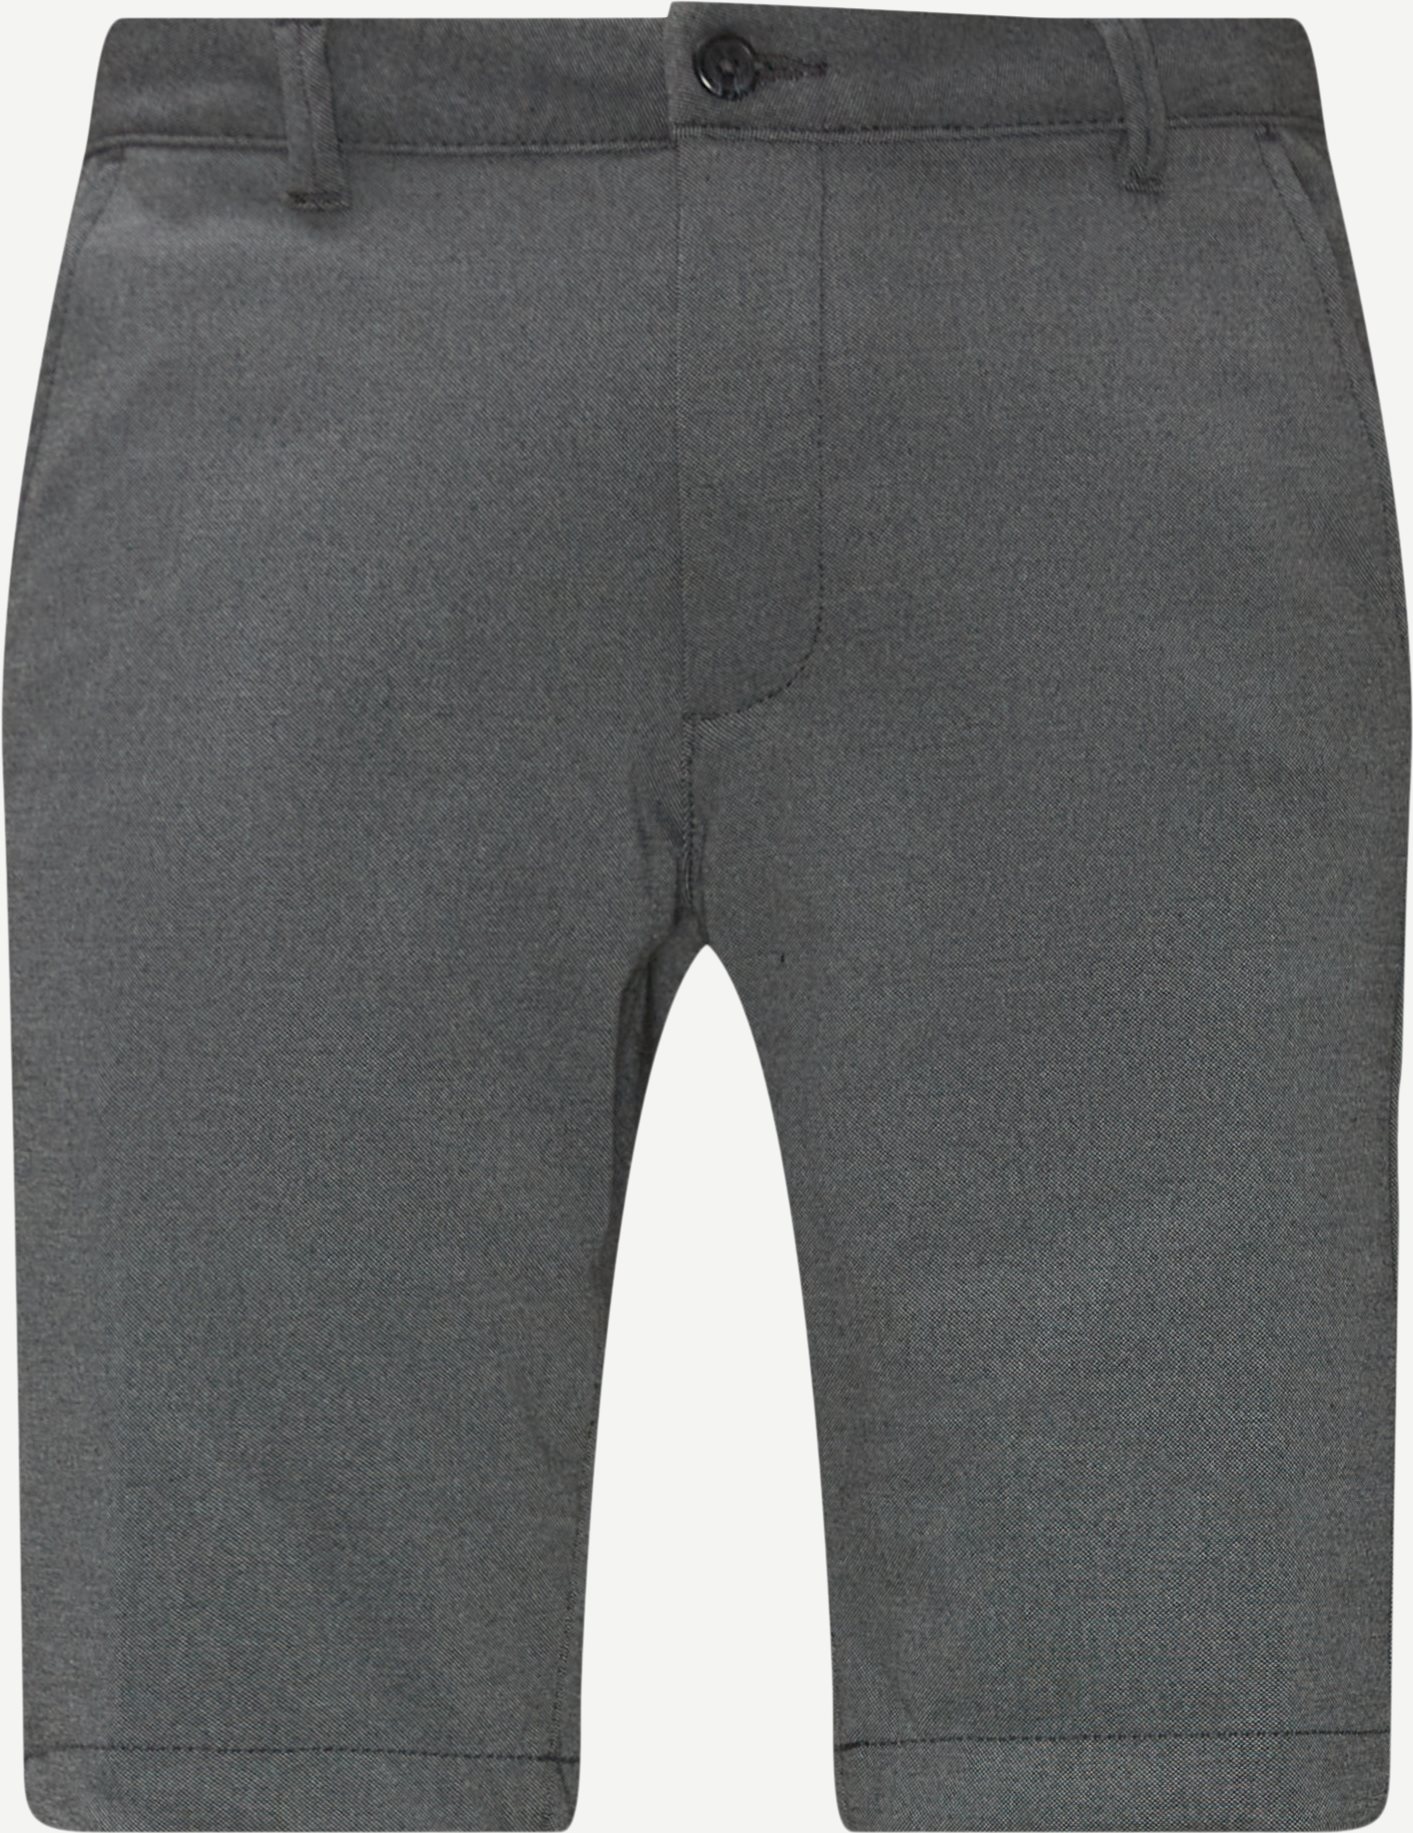 Tanzania Chinos Shorts - Shorts - Regular fit - Grå